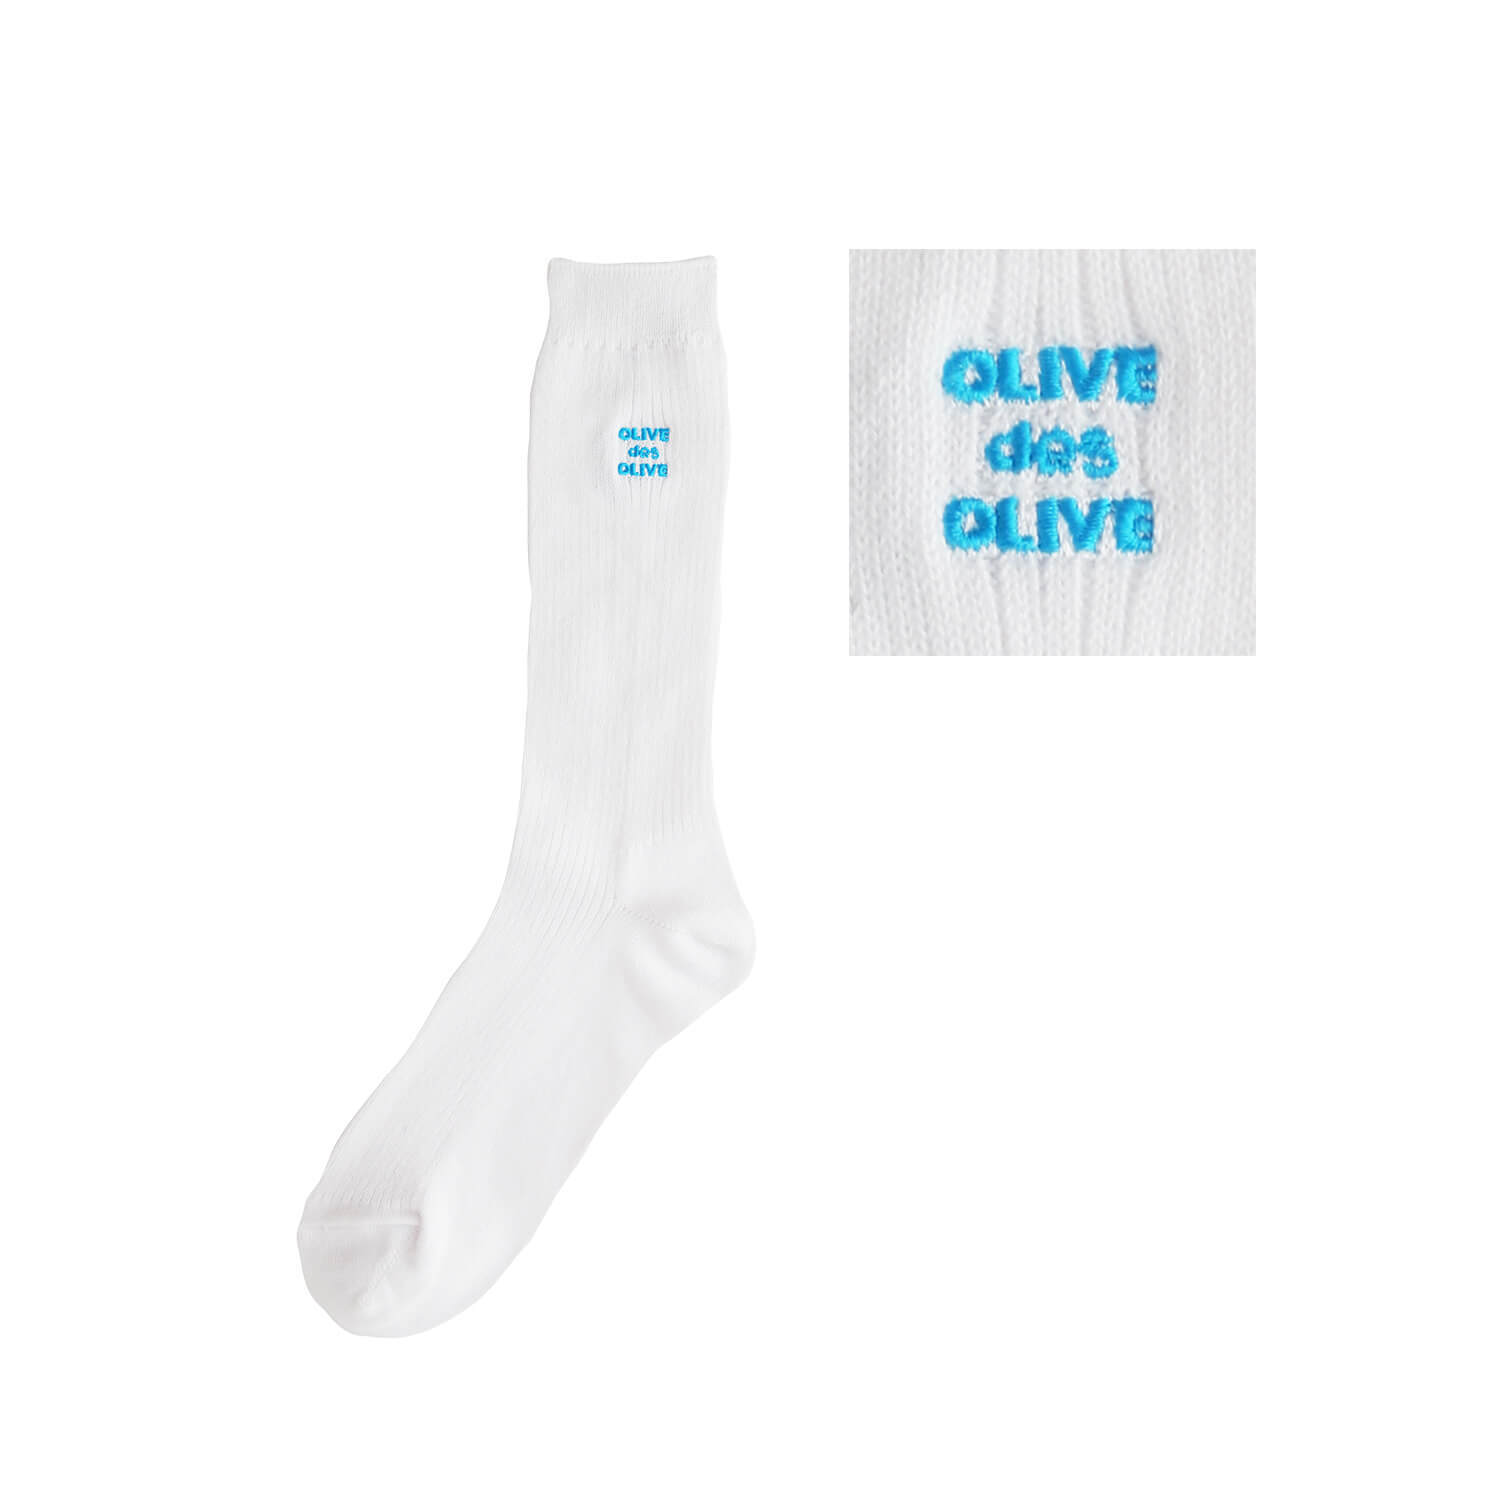 OLIVE des OLIVEのポップなロゴ刺繍入りの白ソックス。刺繍カラー-70ブルー